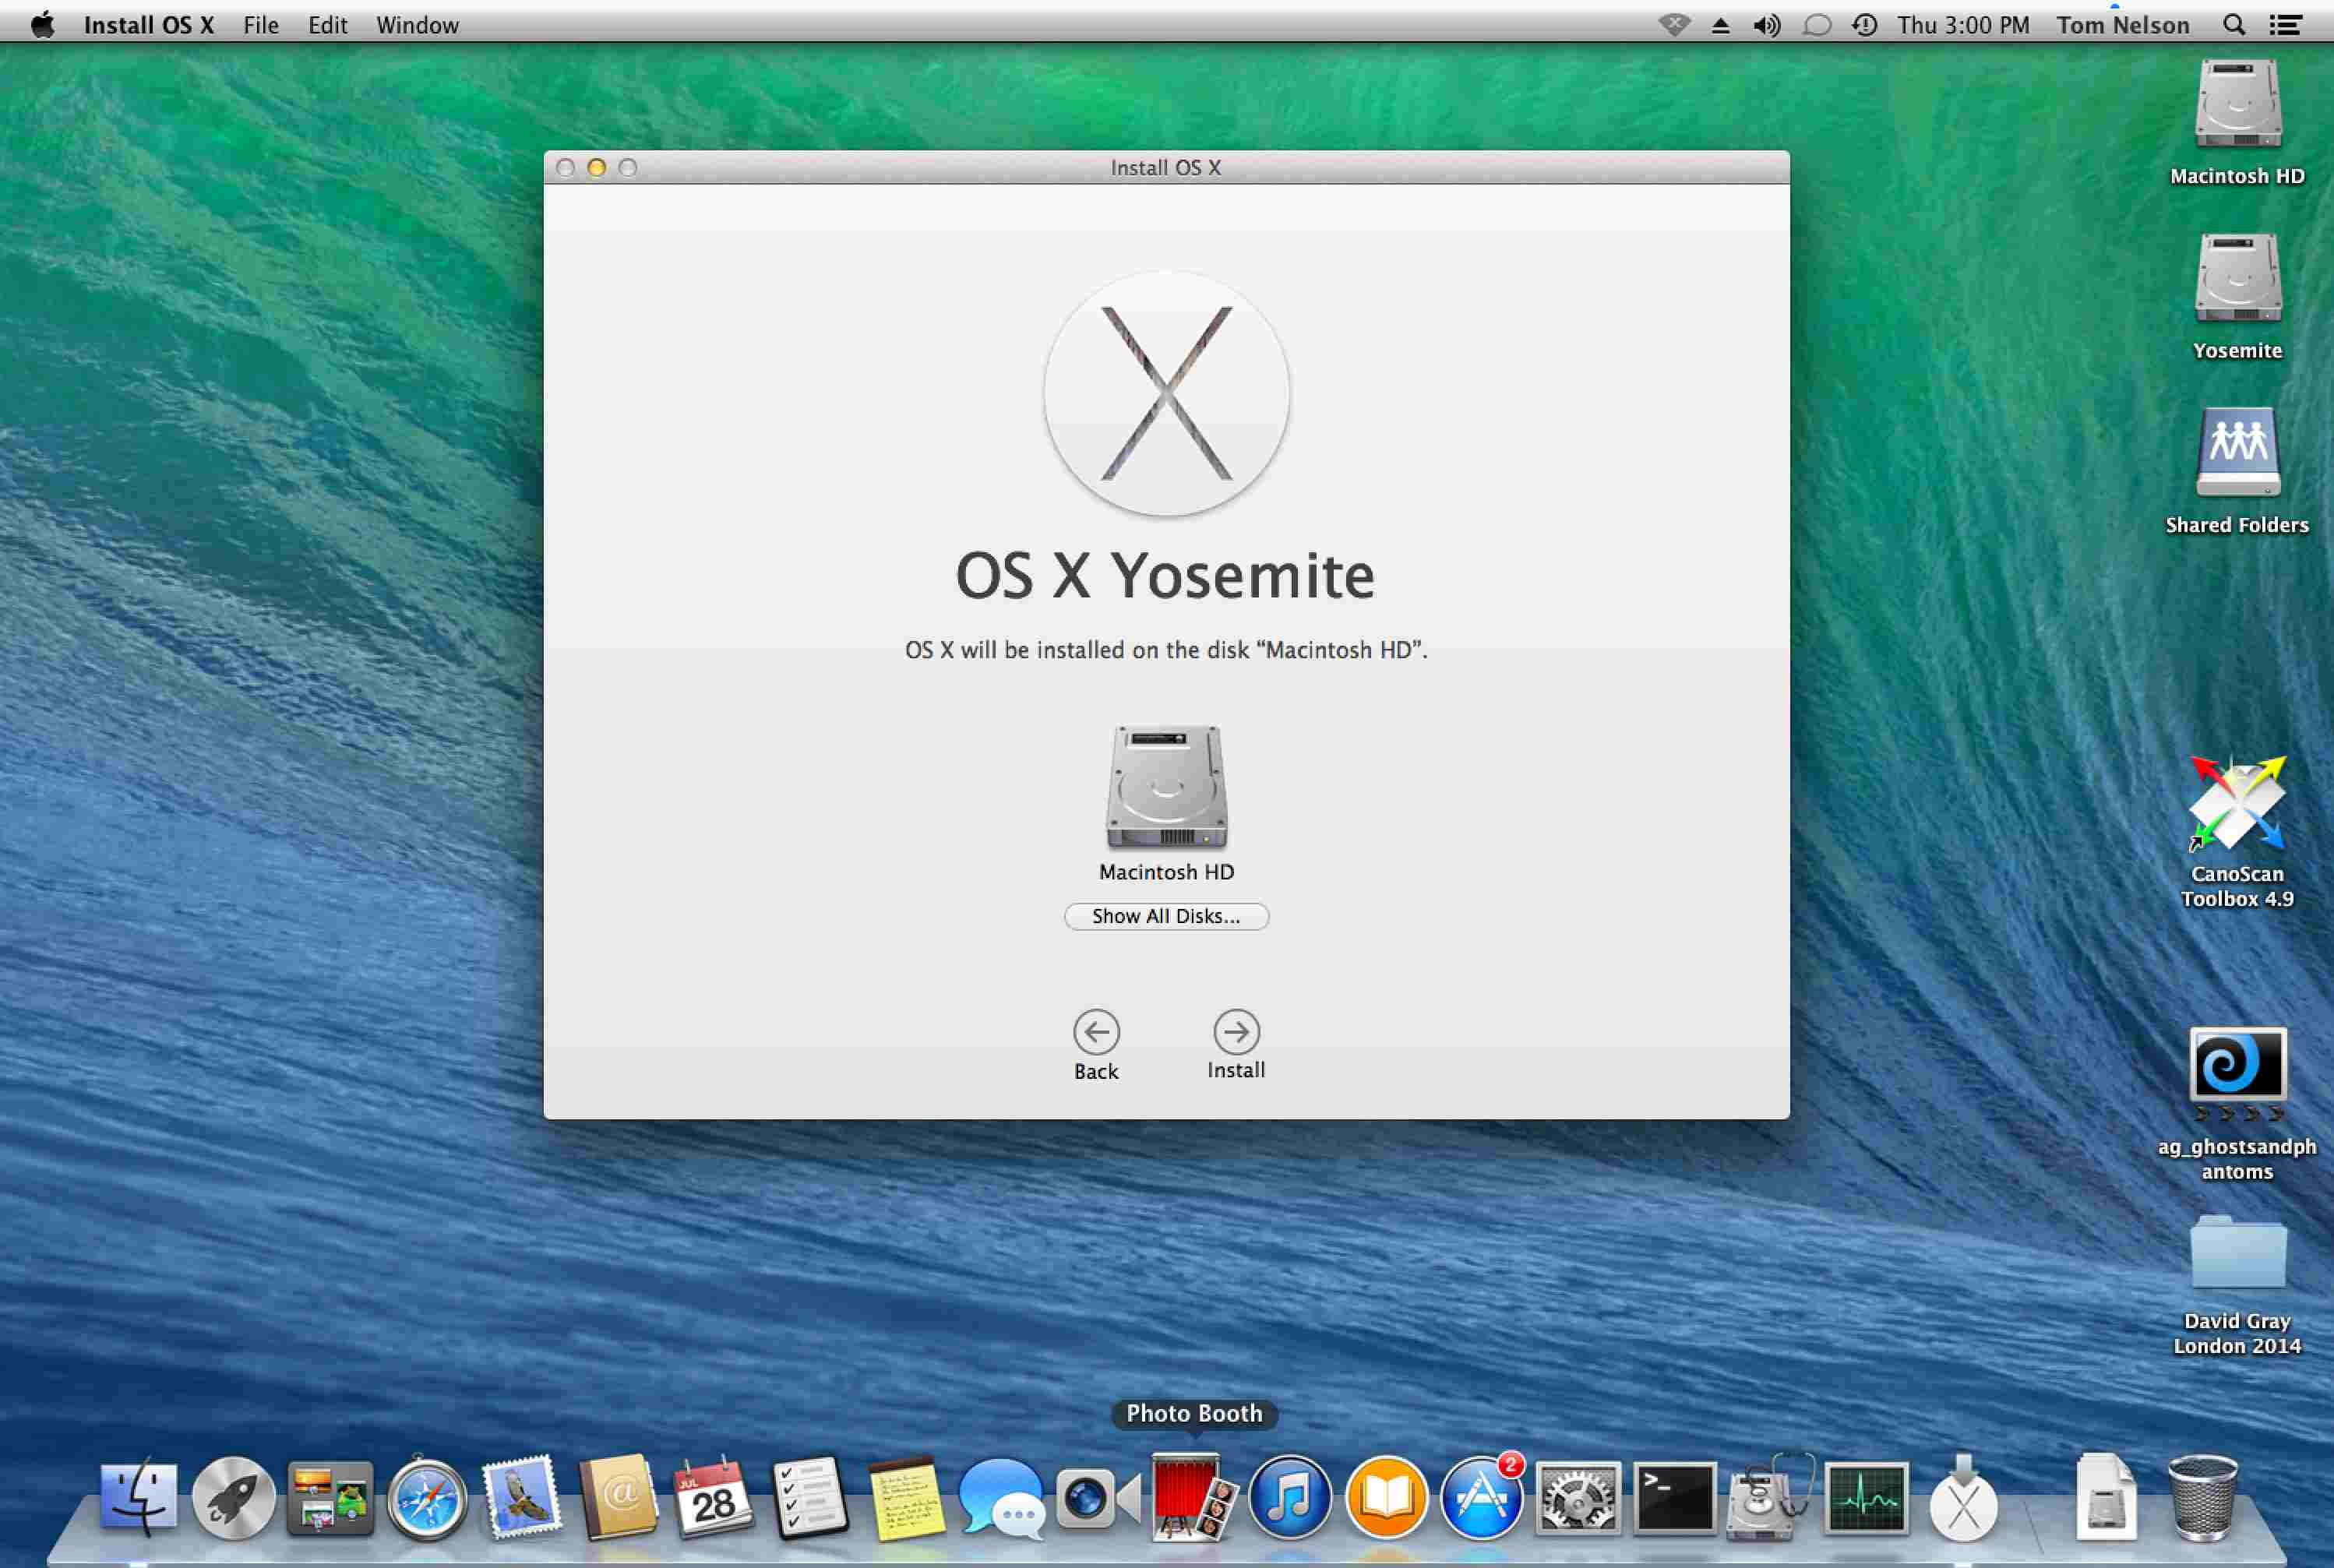 Mac software download 10.10 windows 10